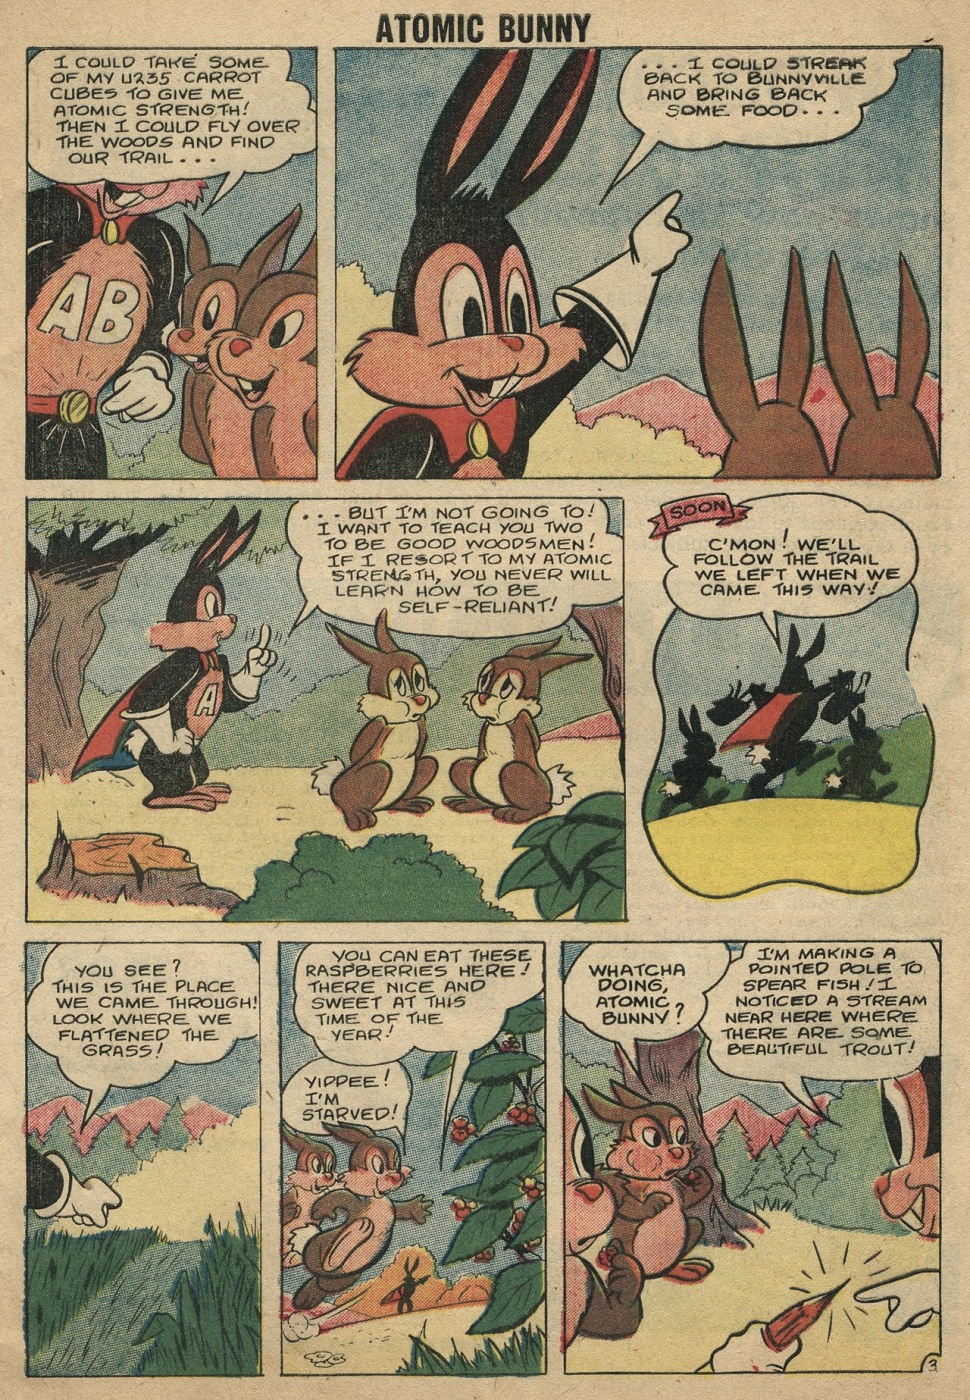 Atomic-Bunny-Comic-Strips (5)